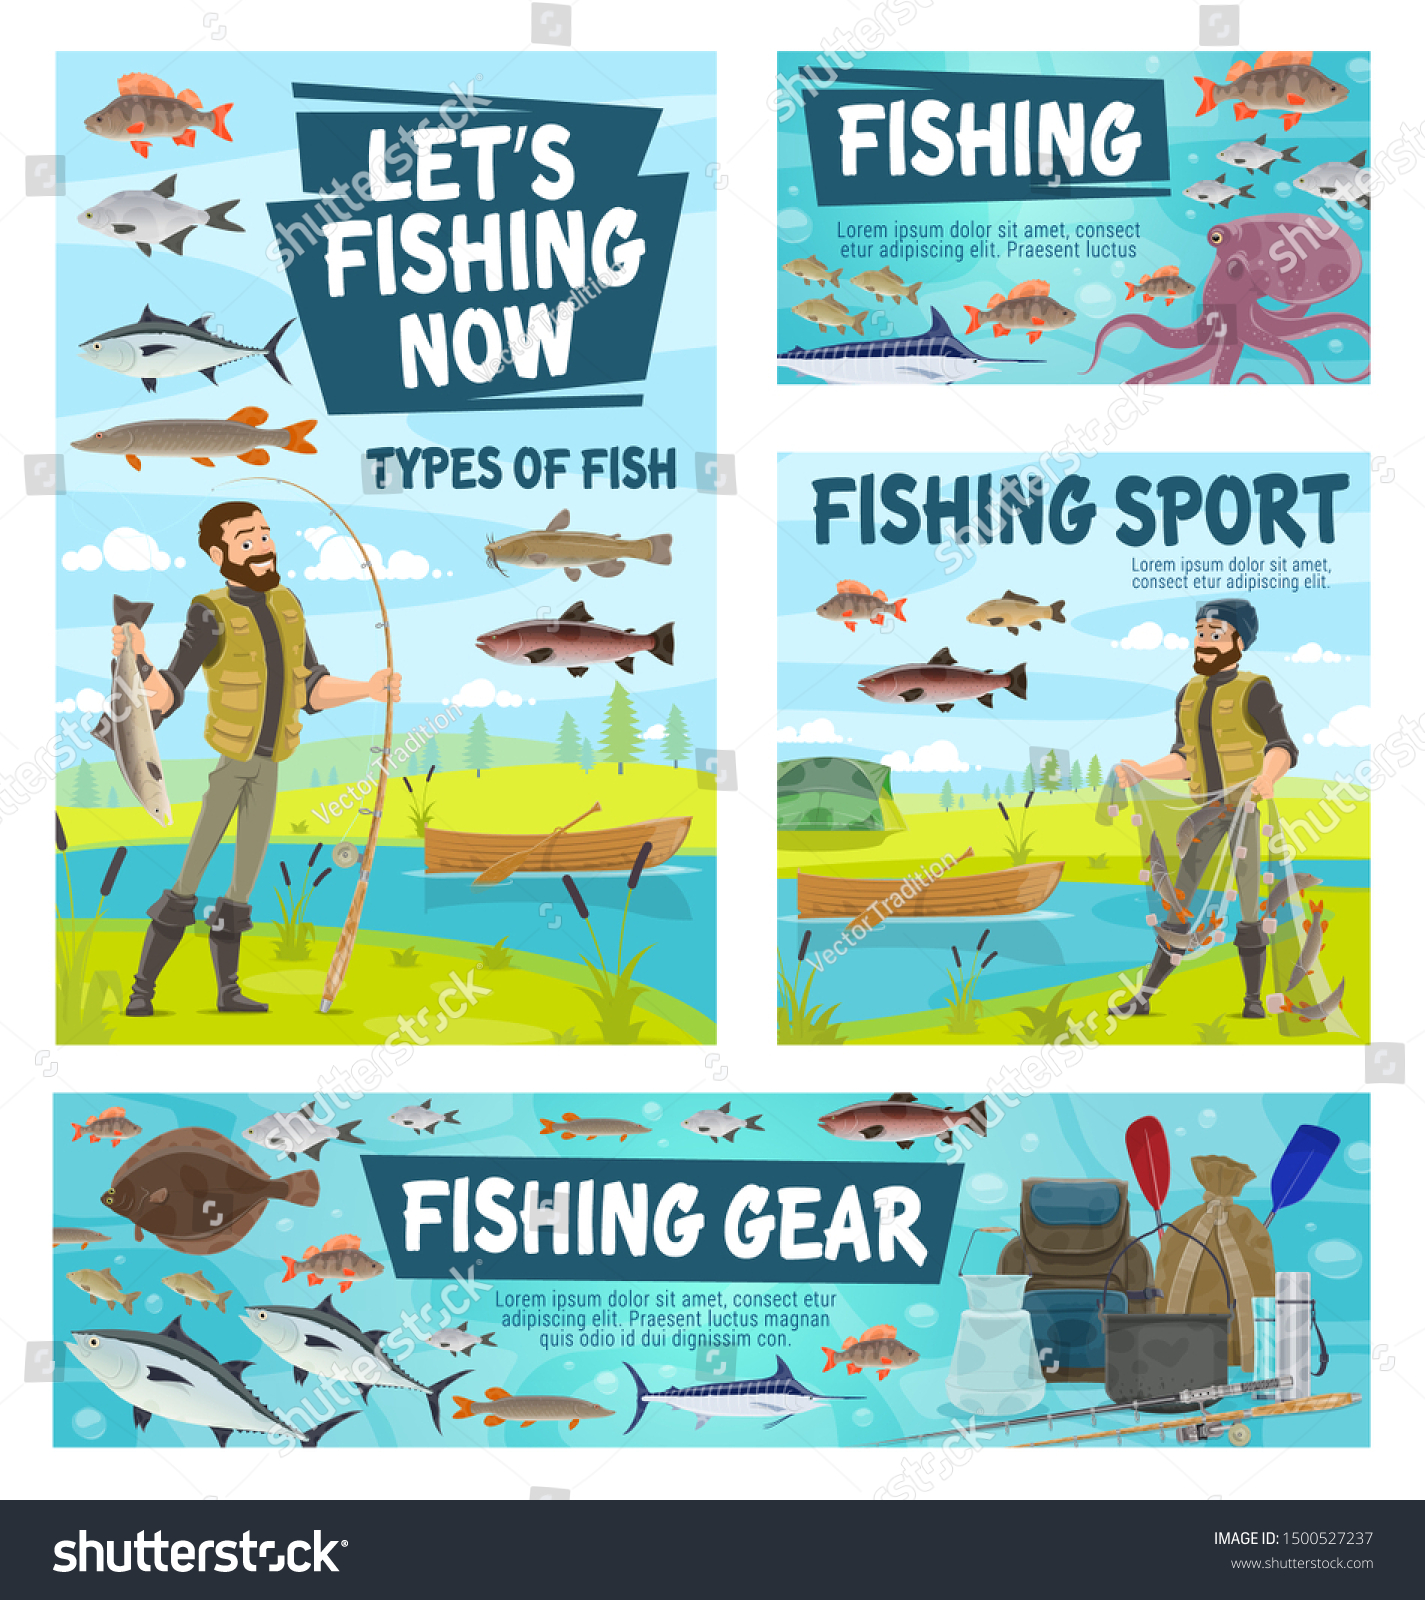 types of fishing gear